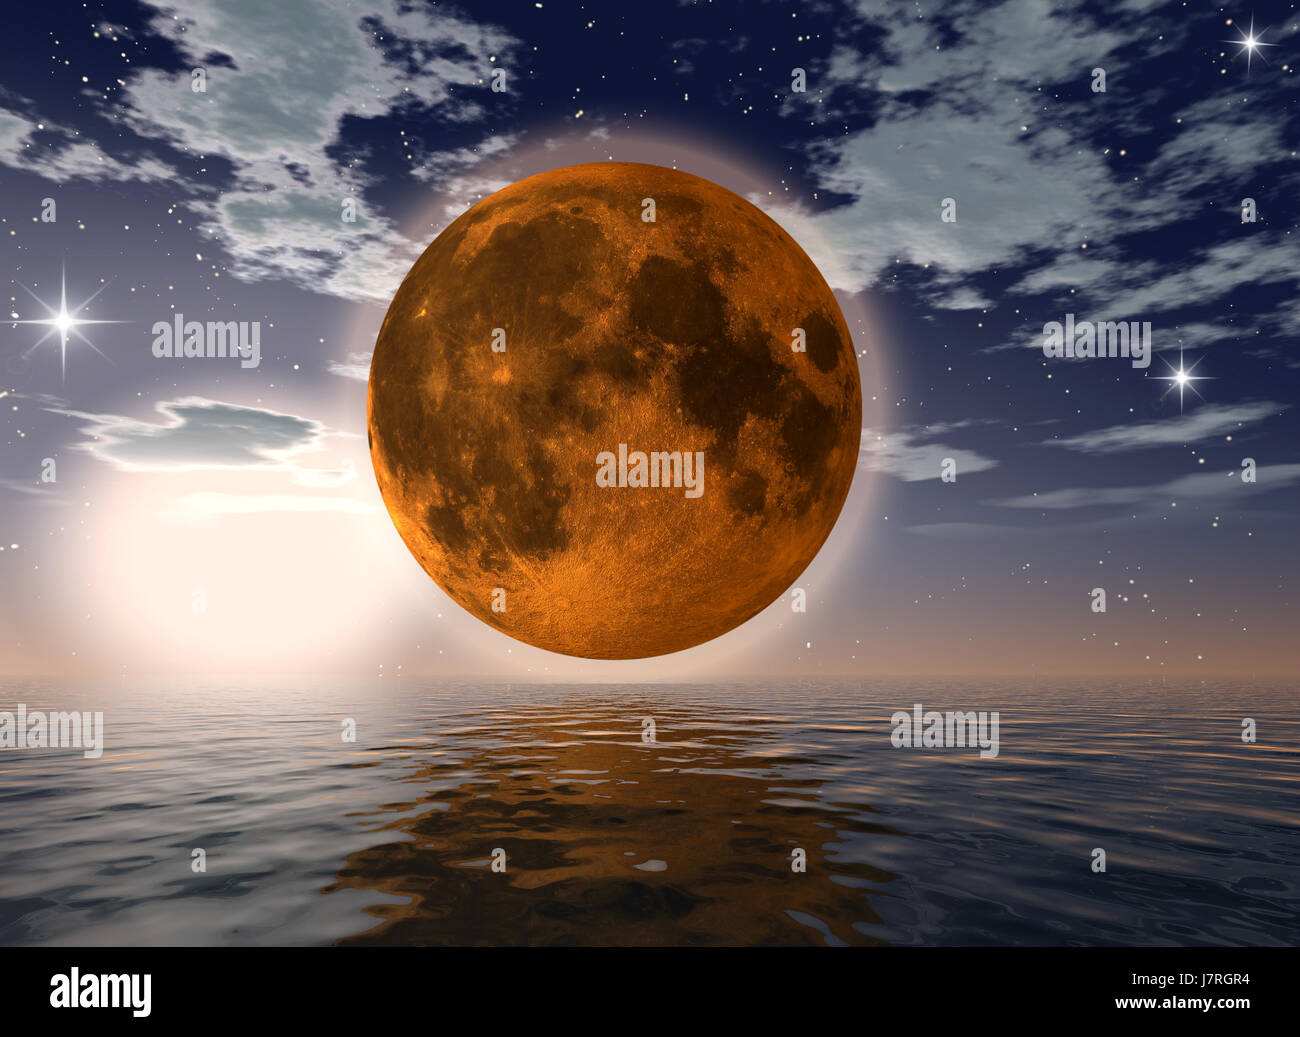 moon fantasy full globe planet earth world firmament sky salt water sea ocean Stock Photo